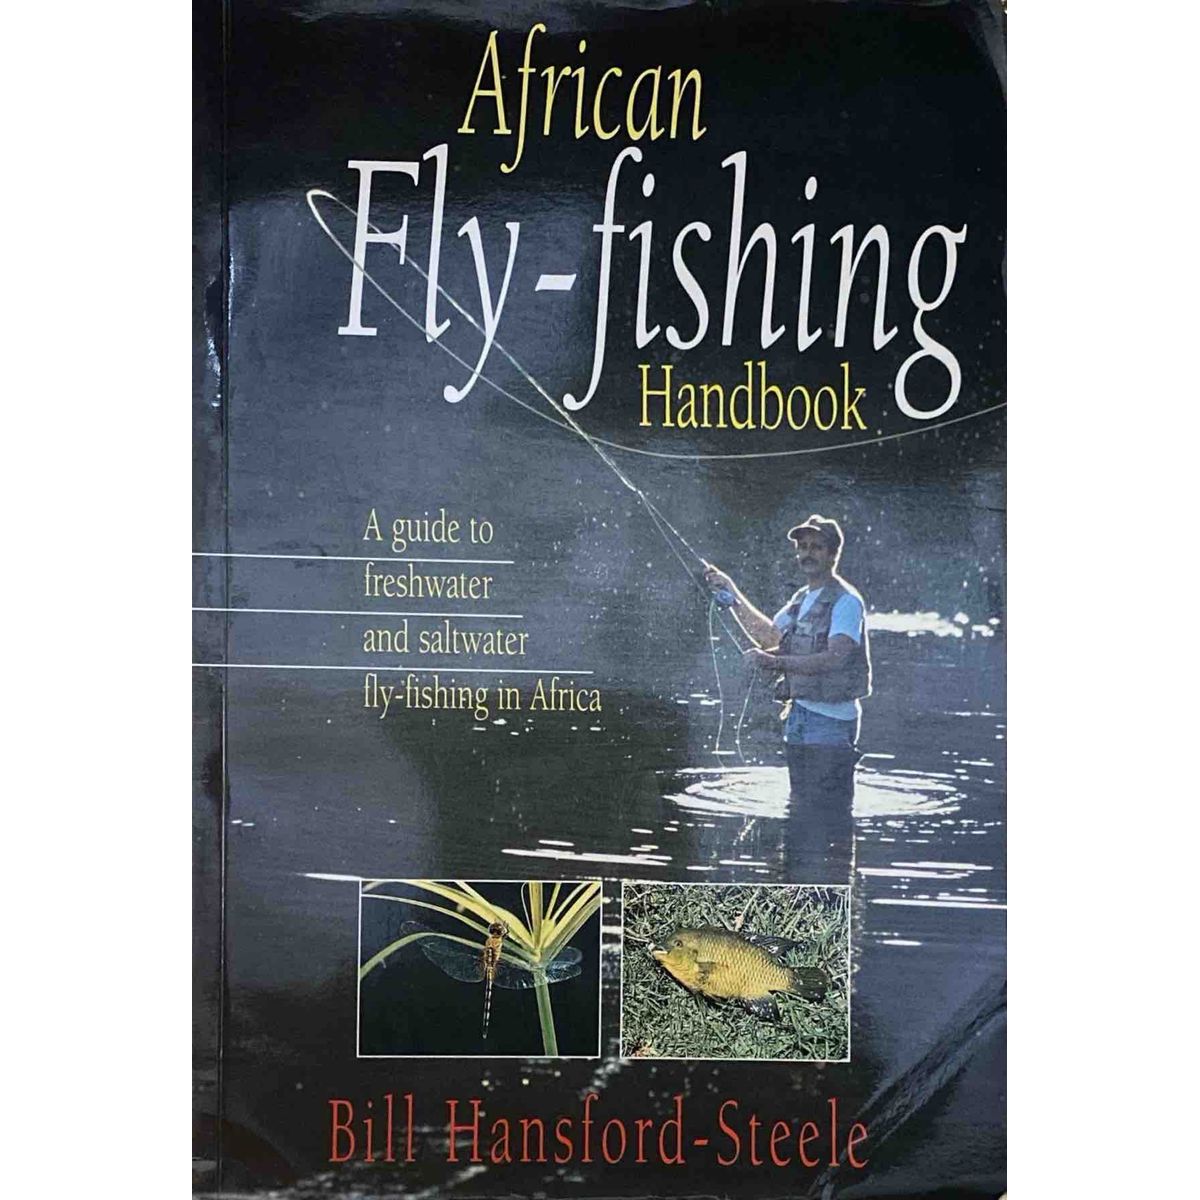 African Fly-Fishing Handbook by Bill Hansford-Steele